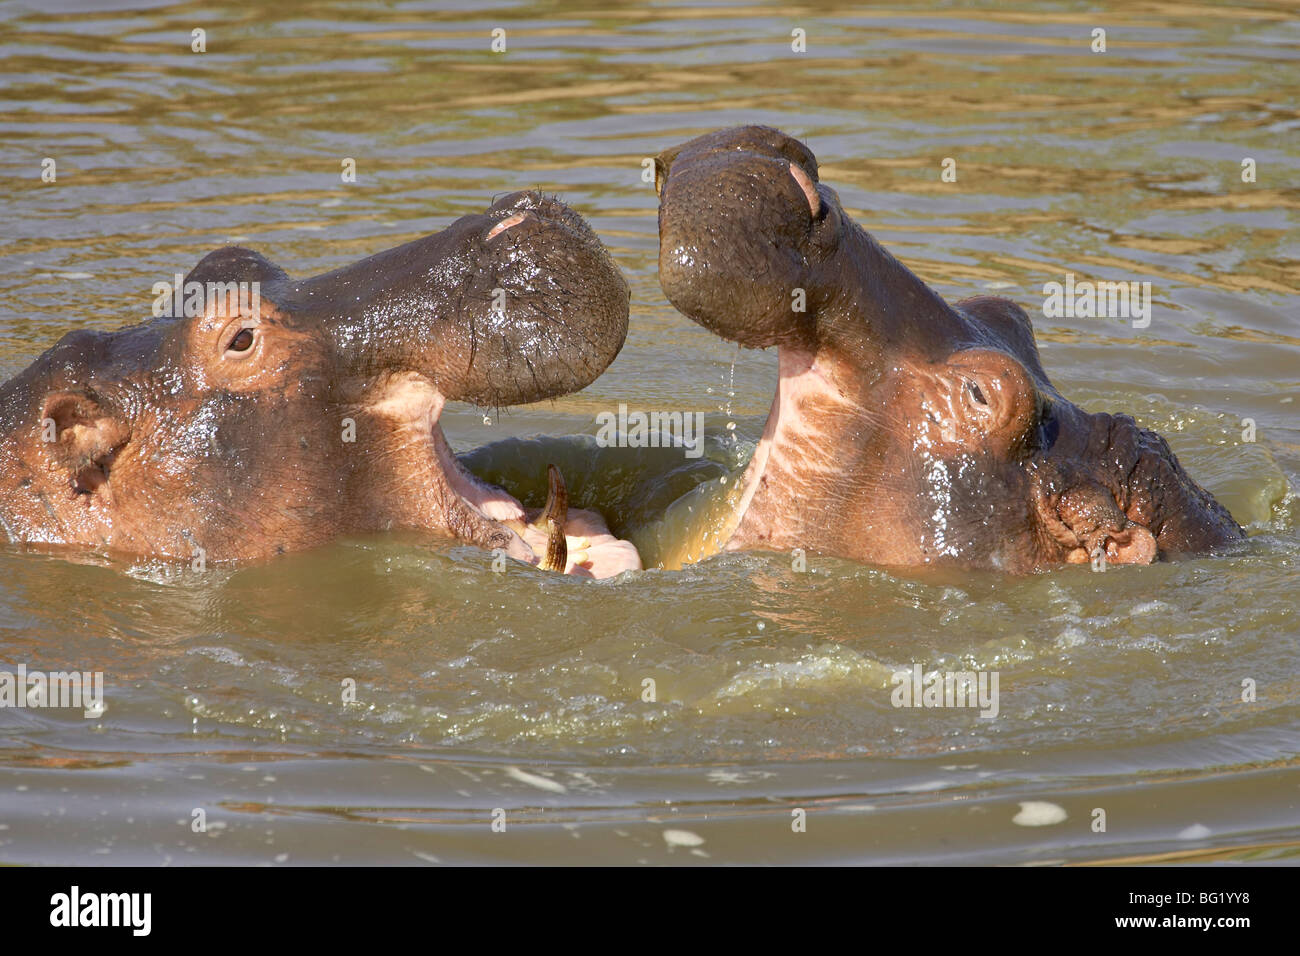 Two hippopotamus (Hippopotamus amphibius) fighting, Masai Mara Game Reserve, Kenya, East Africa, Africa Stock Photo